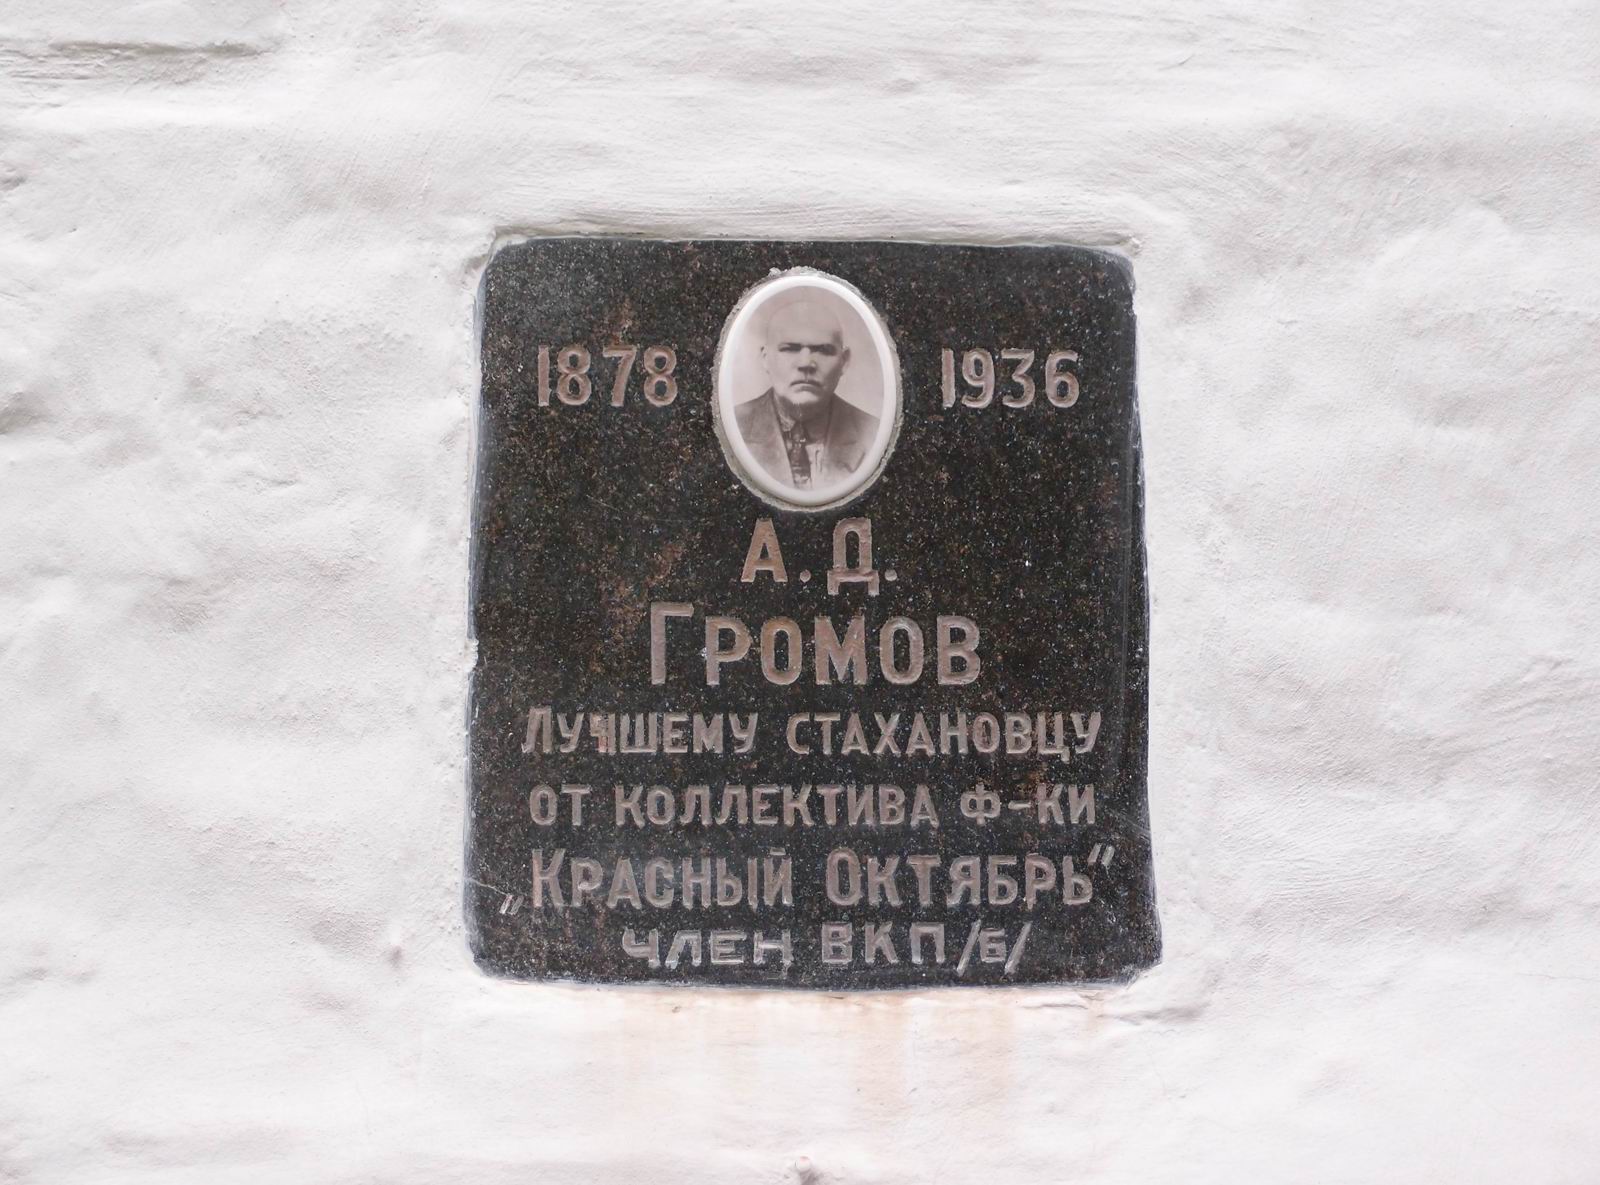 Плита на нише Громов А.Д. (1878-1936), на Новодевичьем кладбище (колумбарий [6]-41).